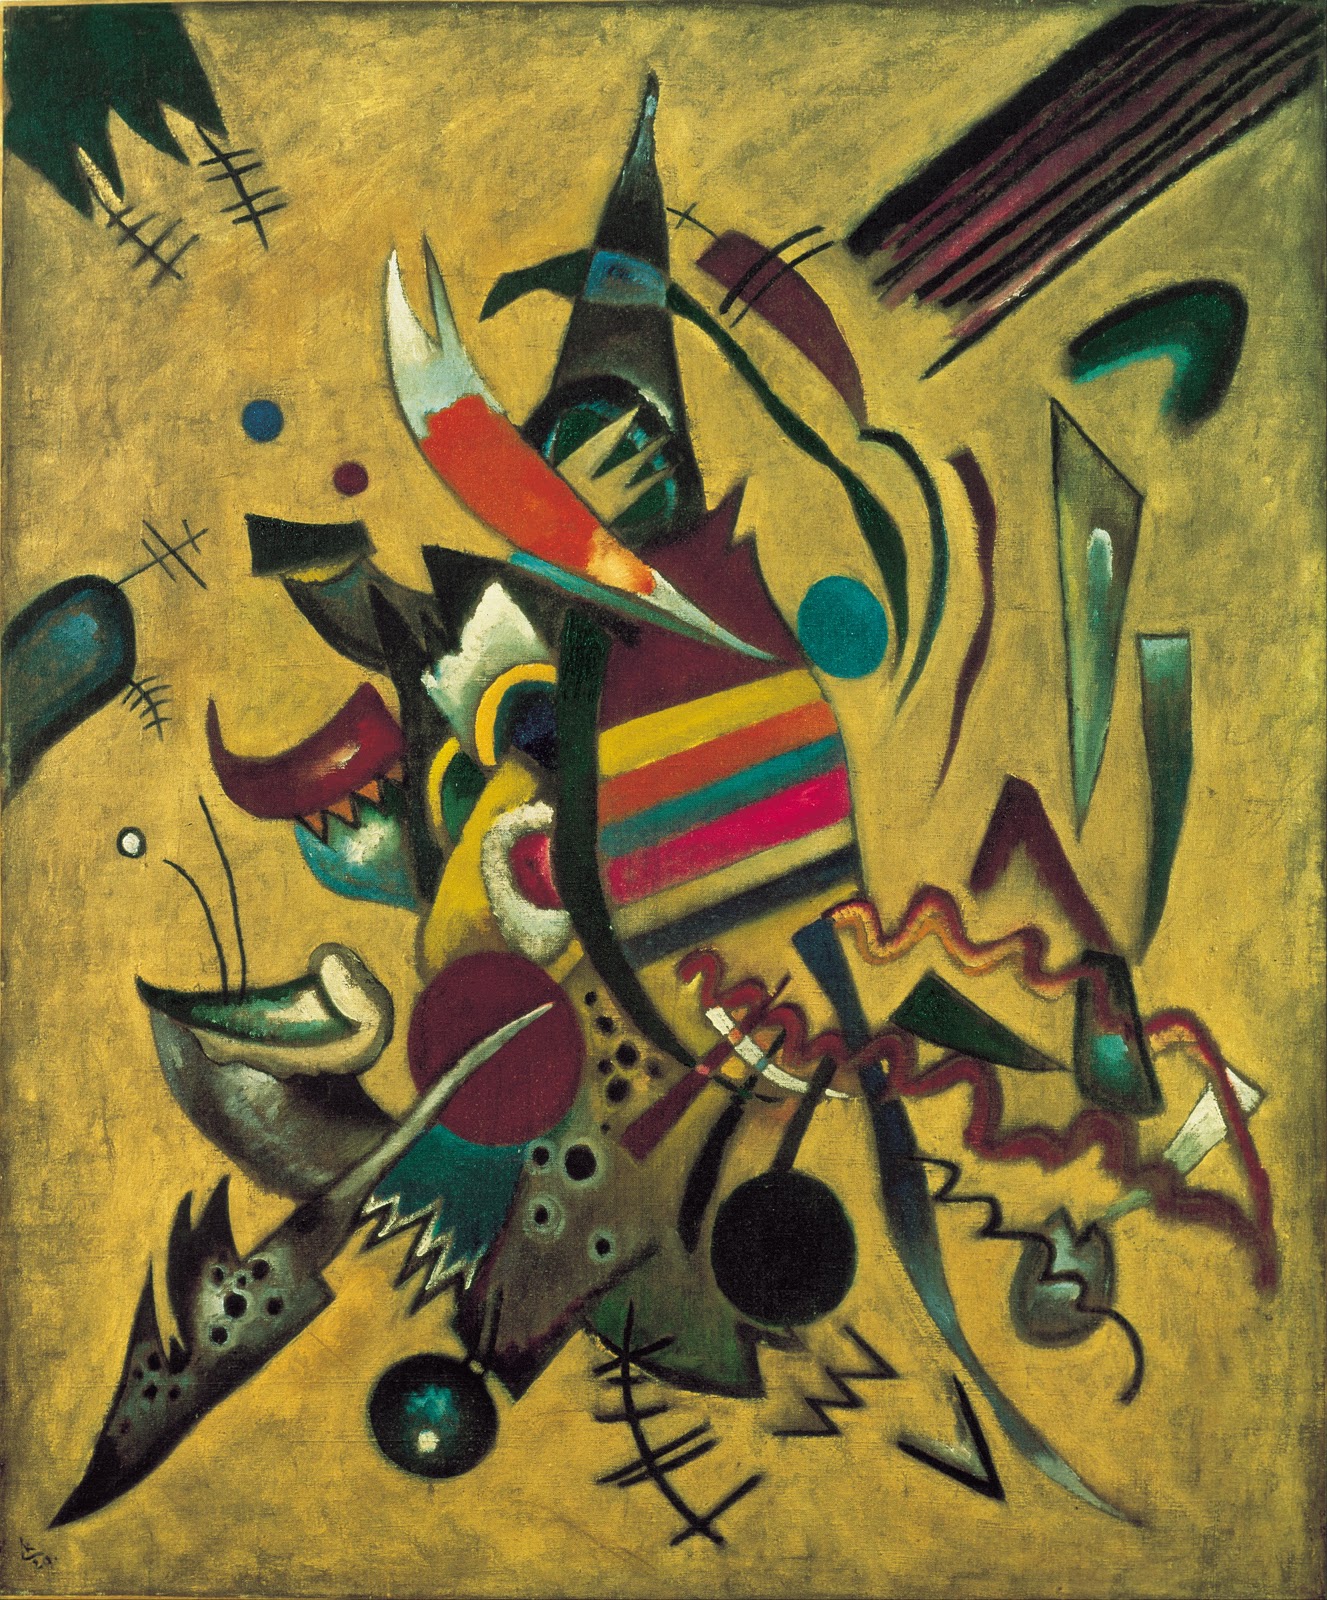 Wassily+Kandinsky-1866-1944 (369).jpg